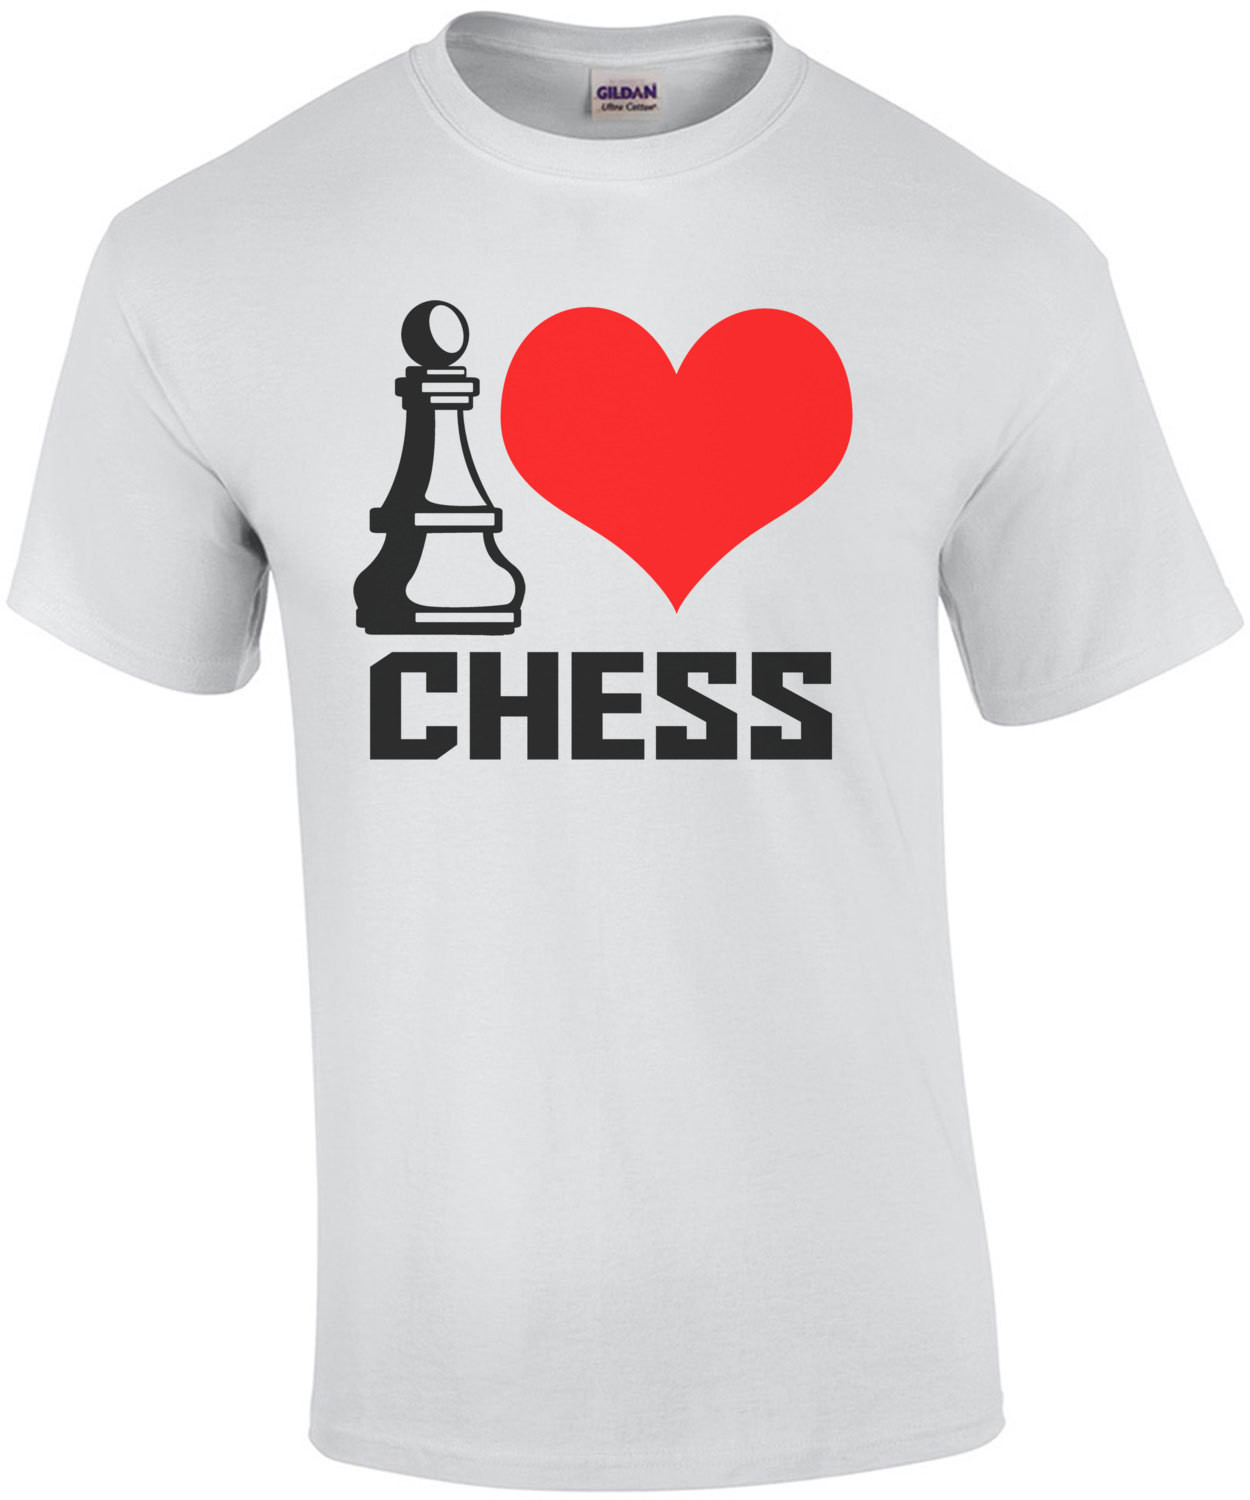 I Heart Chess T-Shirt